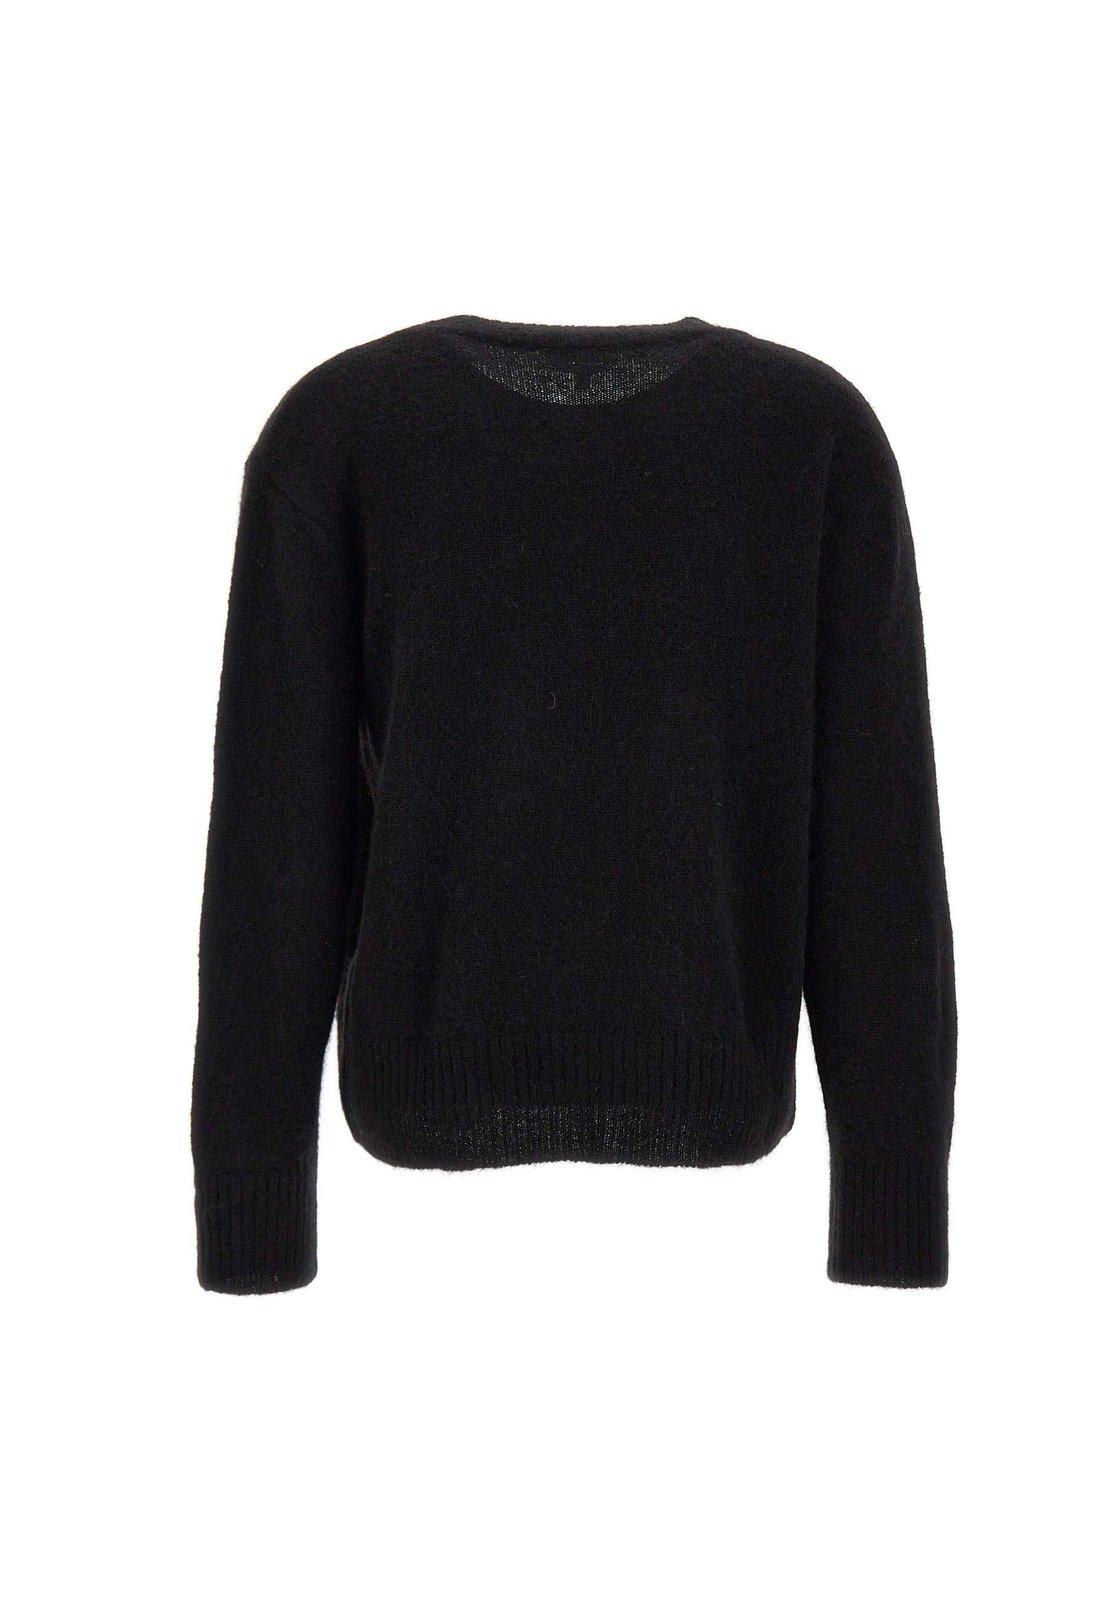 Shop Apc Crewneck Brushed Jumper Sweater In Black